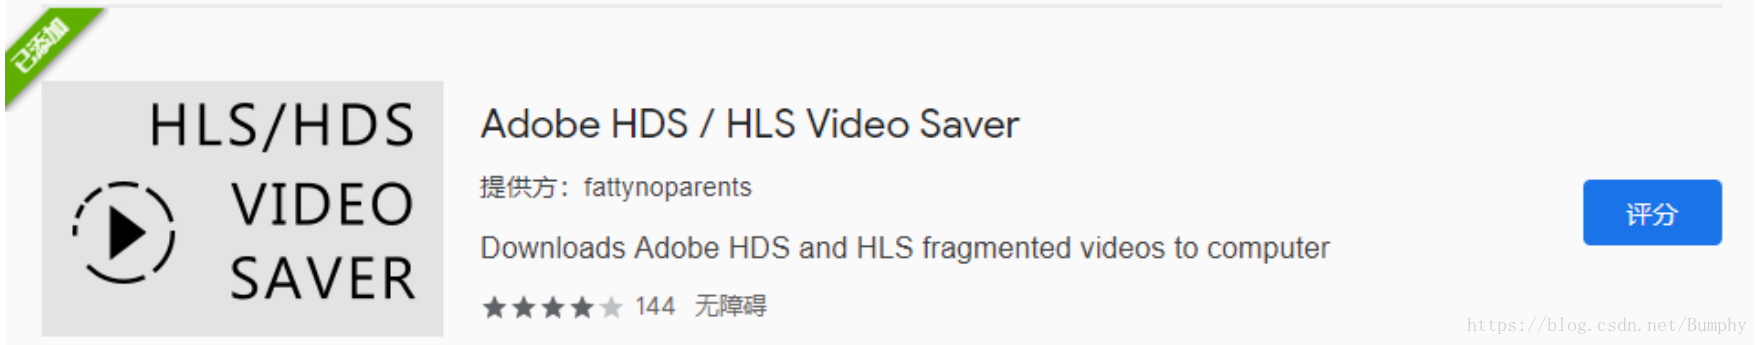 Adobe HDS / HLS Video Saver